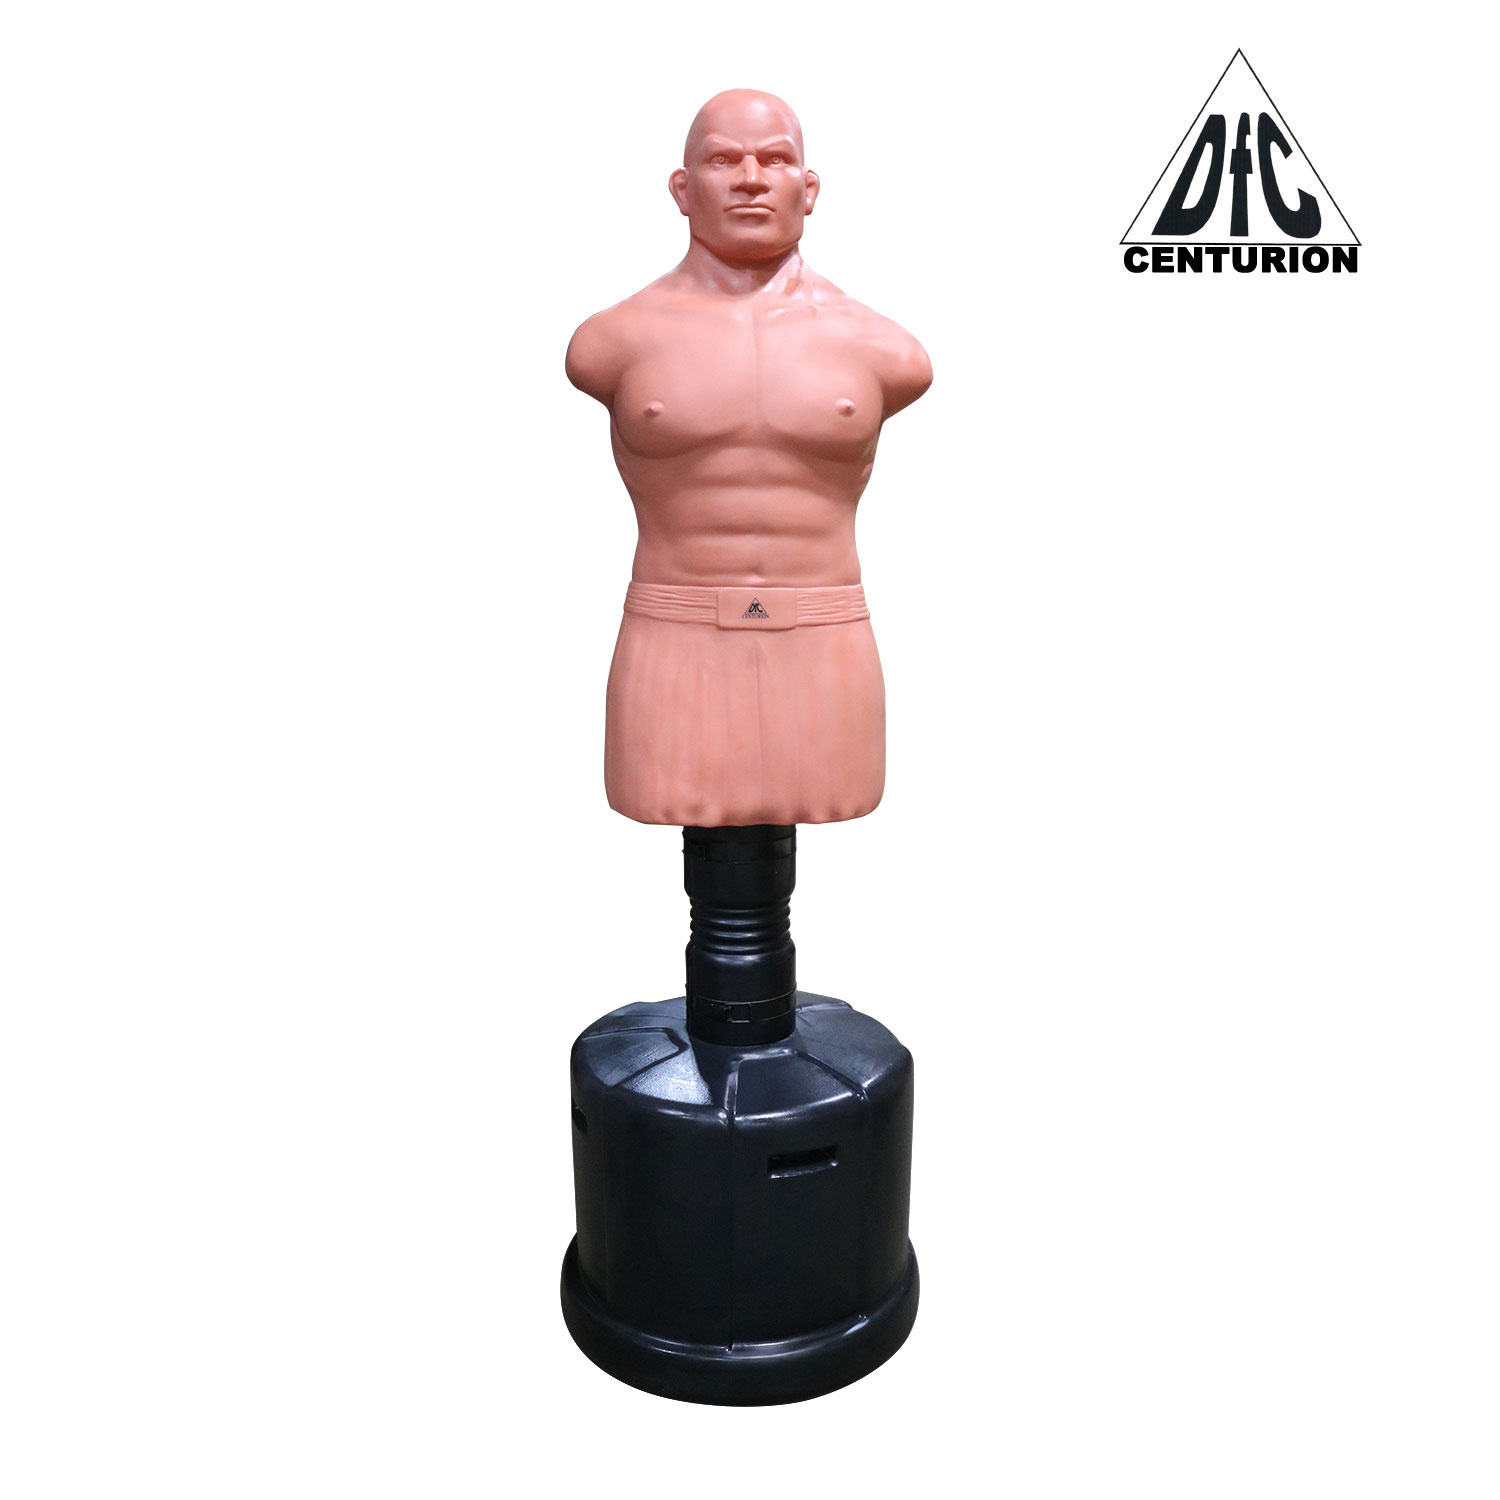 DFC Centurion Boxing Punching Man-Heavy водоналивной - бежевый из каталога манекенов для бокса в Самаре по цене 45990 ₽